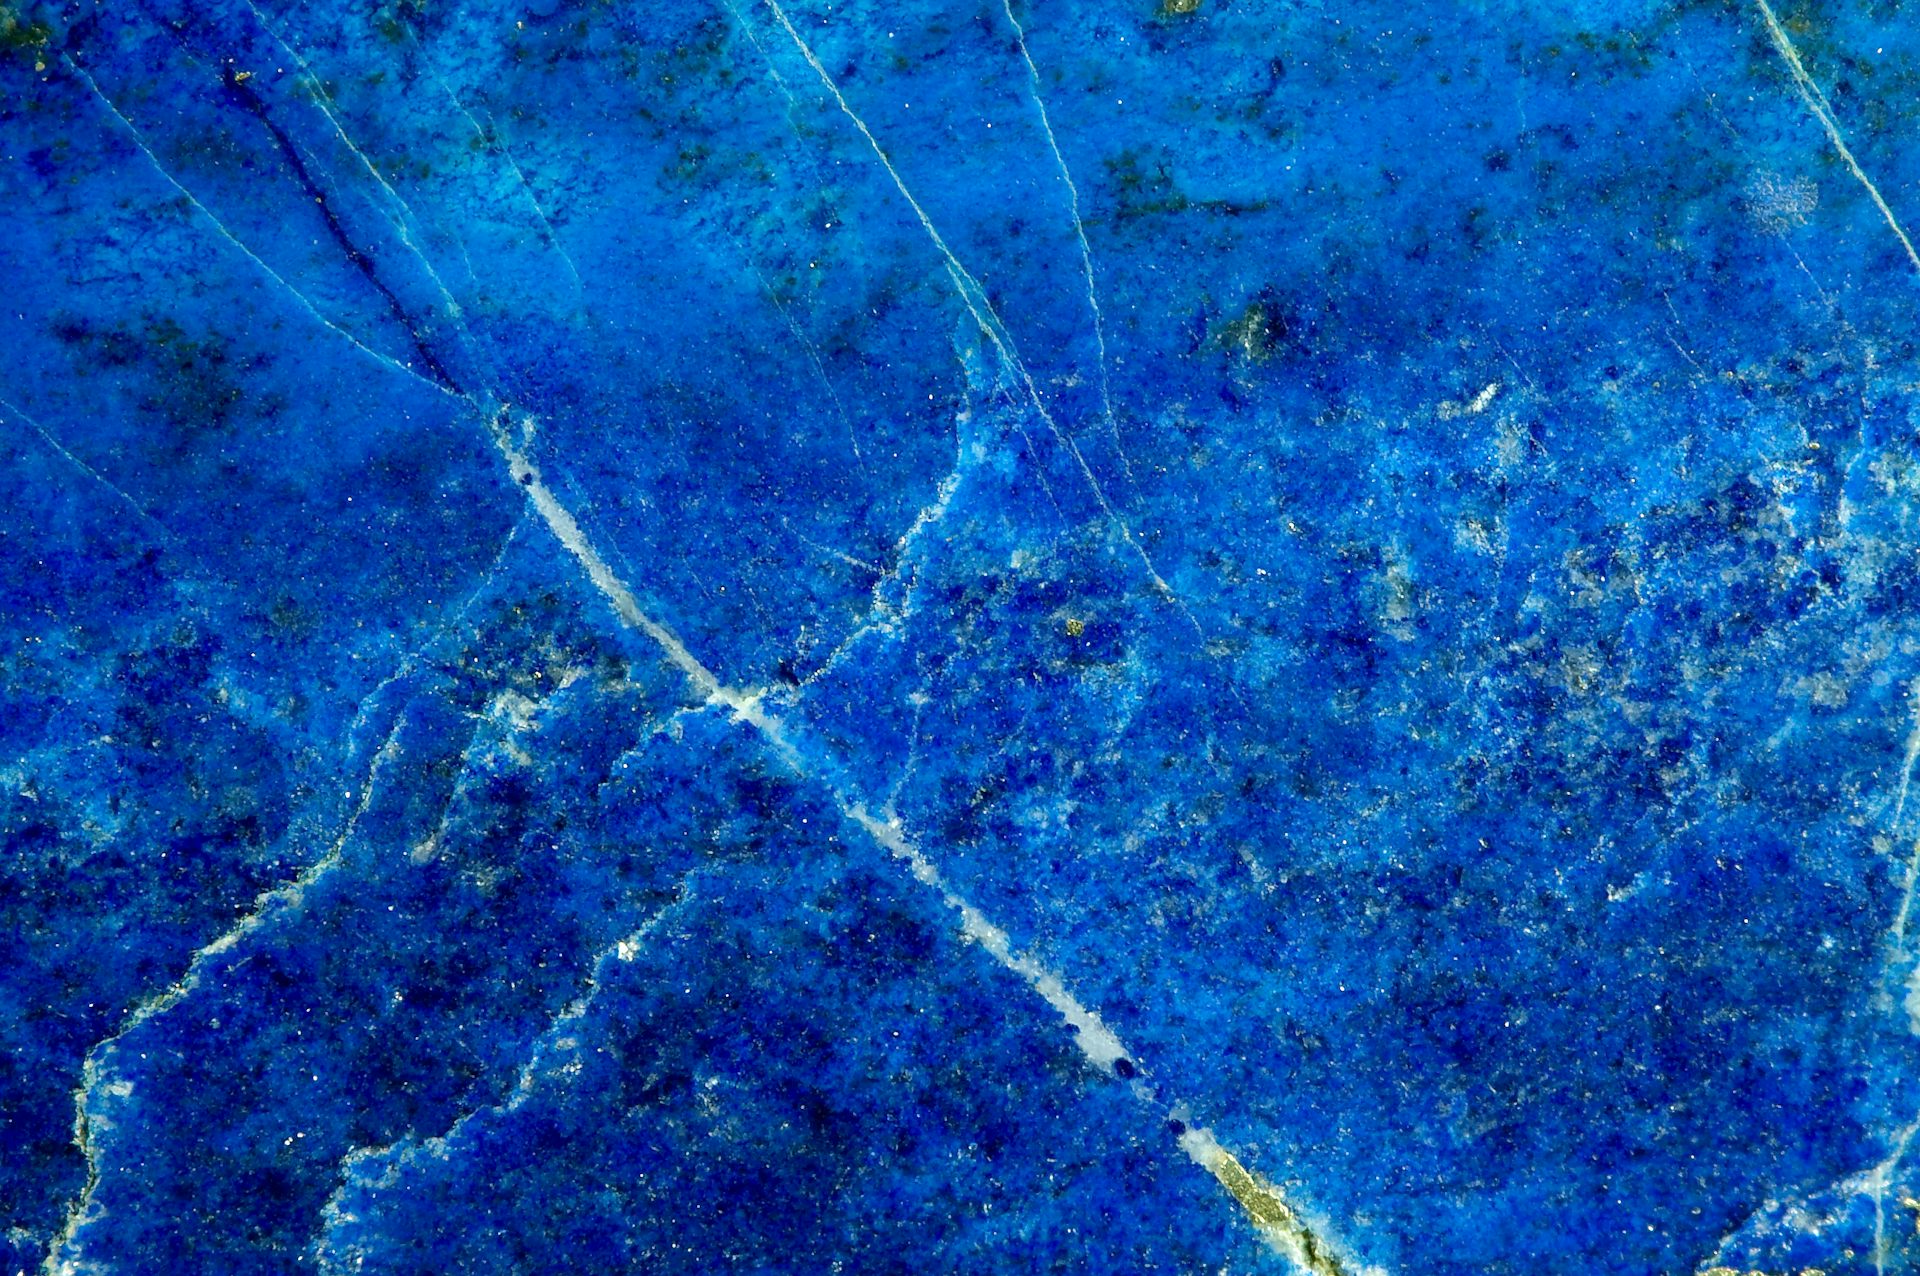 lapis lazuli history